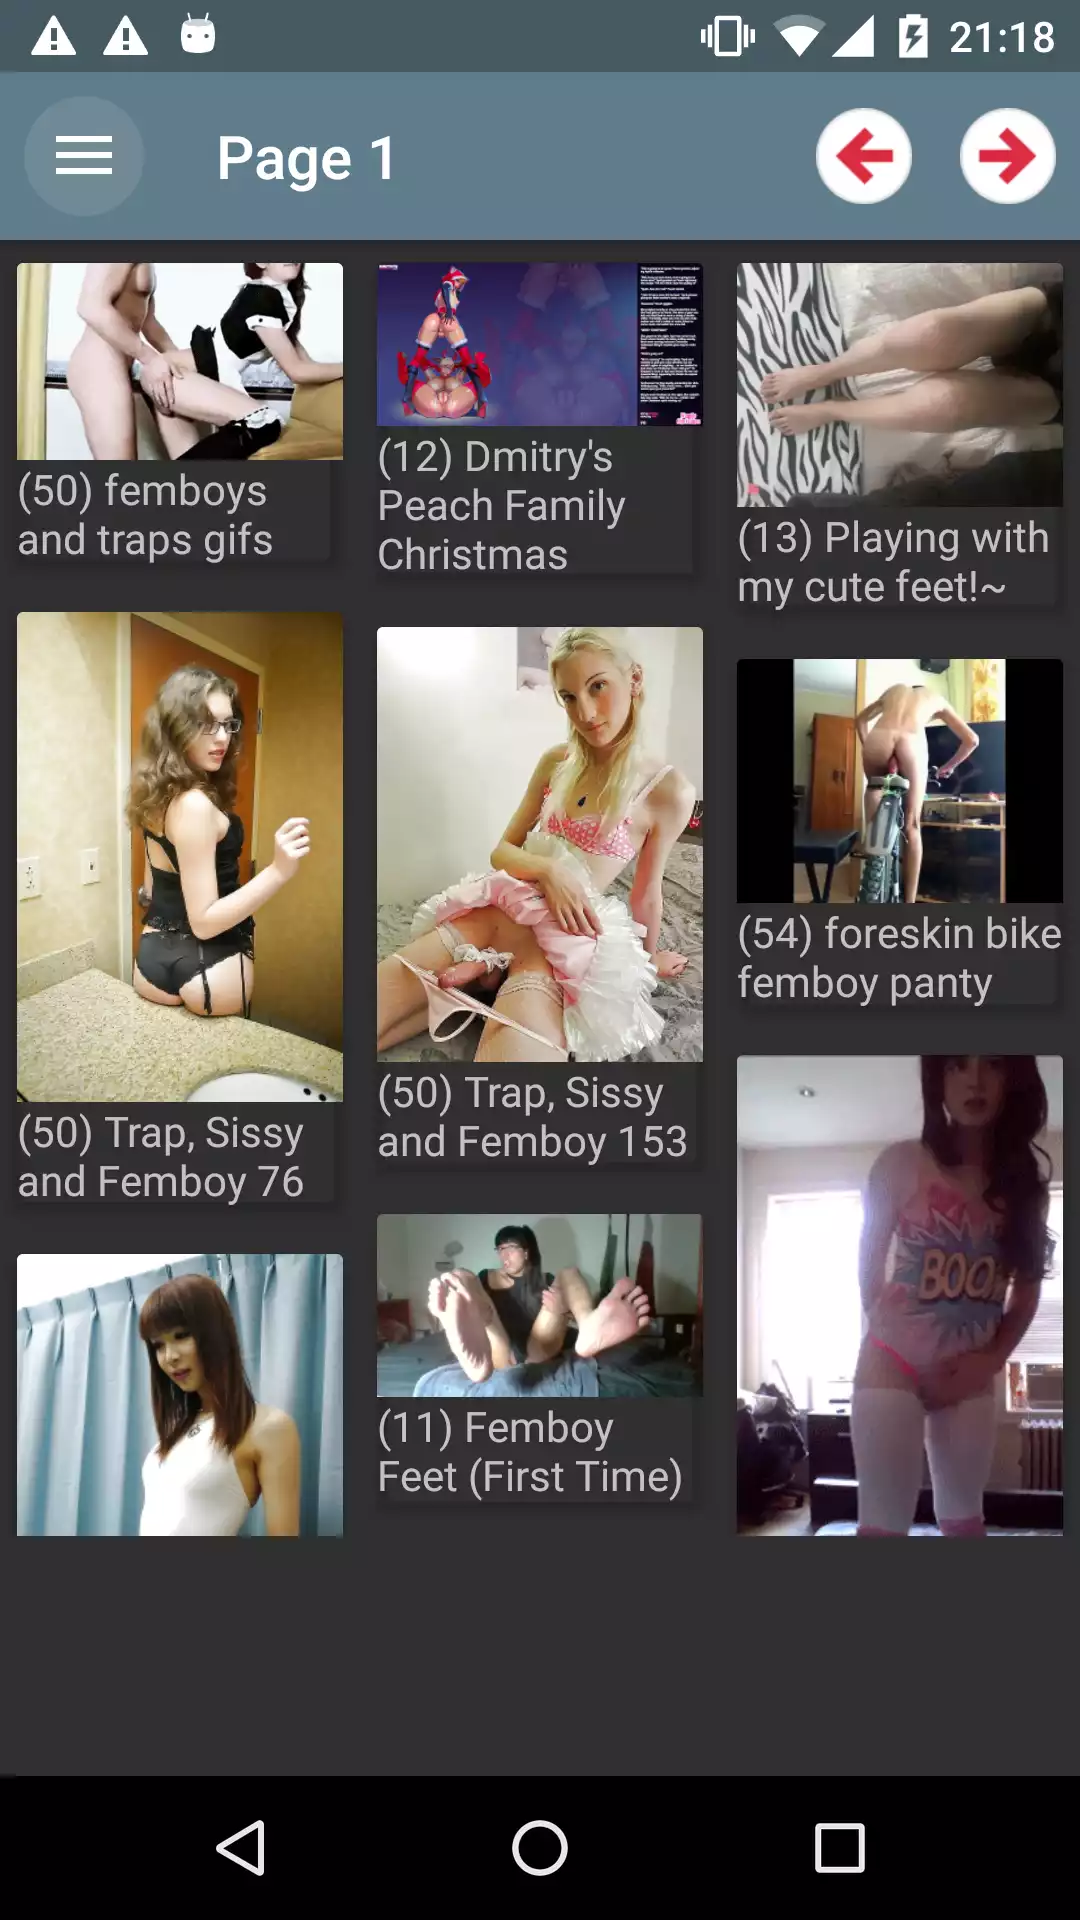 Femboy Galleries henta,app,photo,erotic,pics,cuckold,apk,photos,pornstar,galleries,apks,free,nhentai,sexy,wallpaper,download,pegging,hentai,porn,hot,puzzle,wallpapers